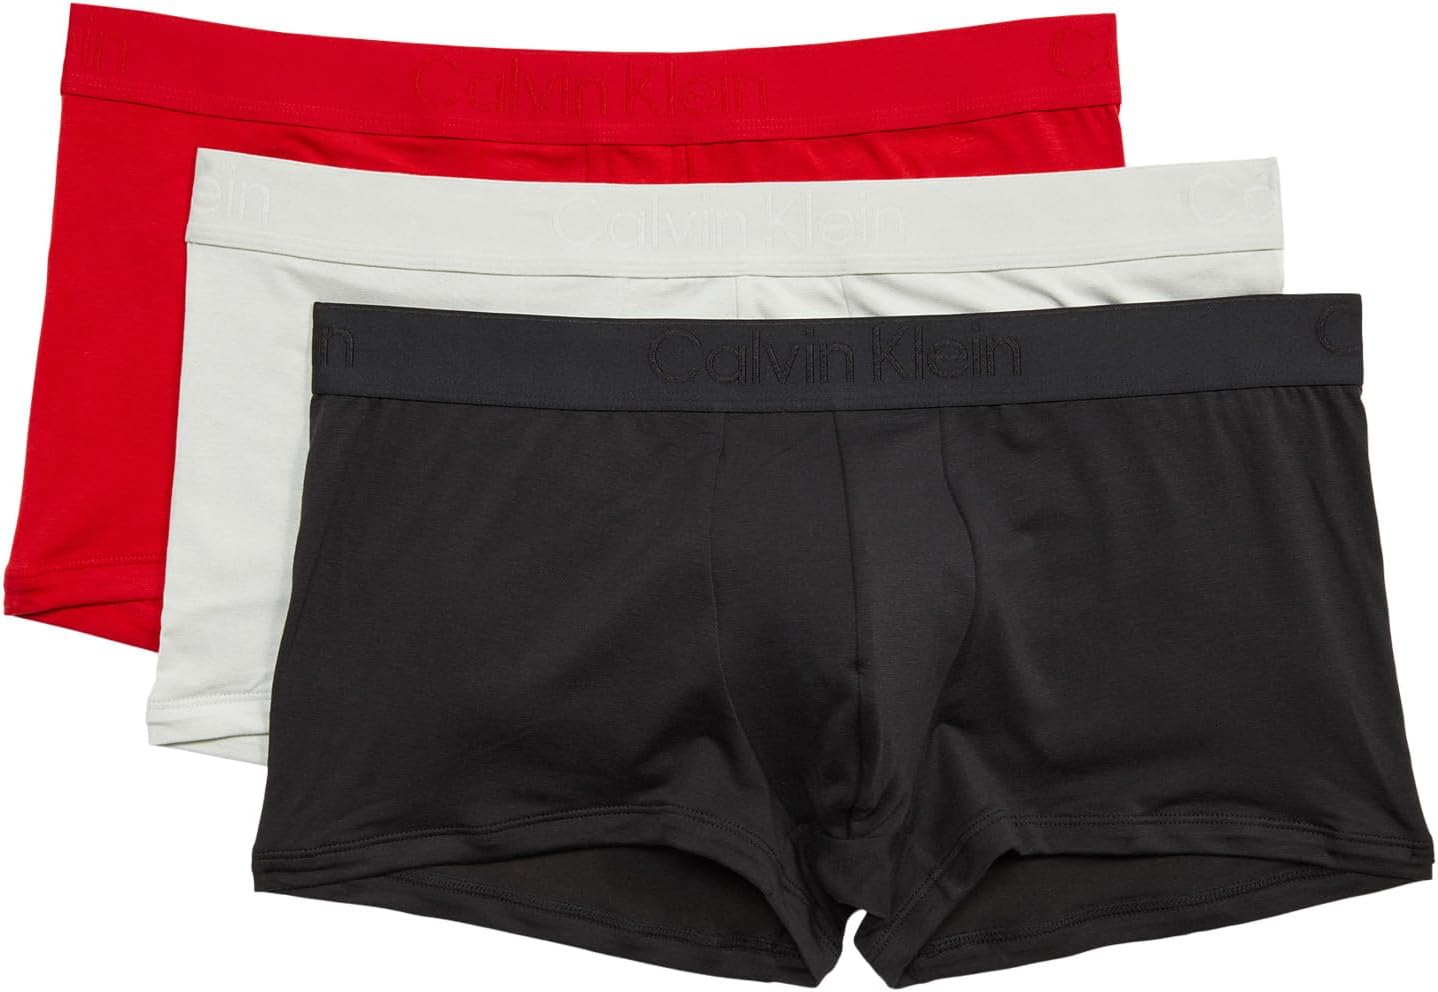 Черные трусы CK с низкой посадкой (3 шт.) Calvin Klein Underwear, цвет Rouge/Lunar Rock/Black